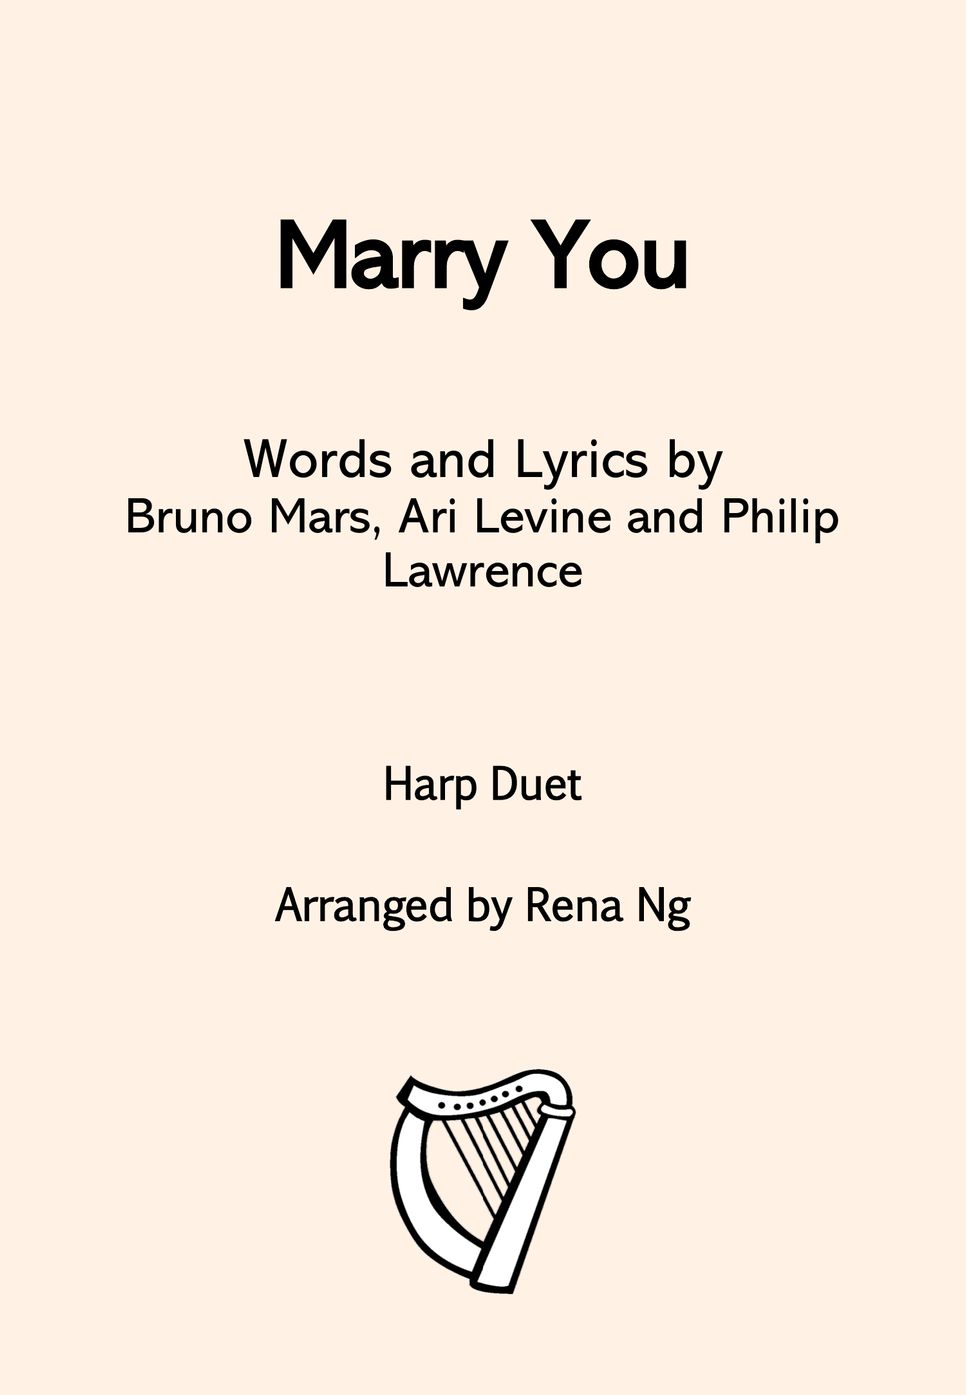 bruno mars marry you lyrics